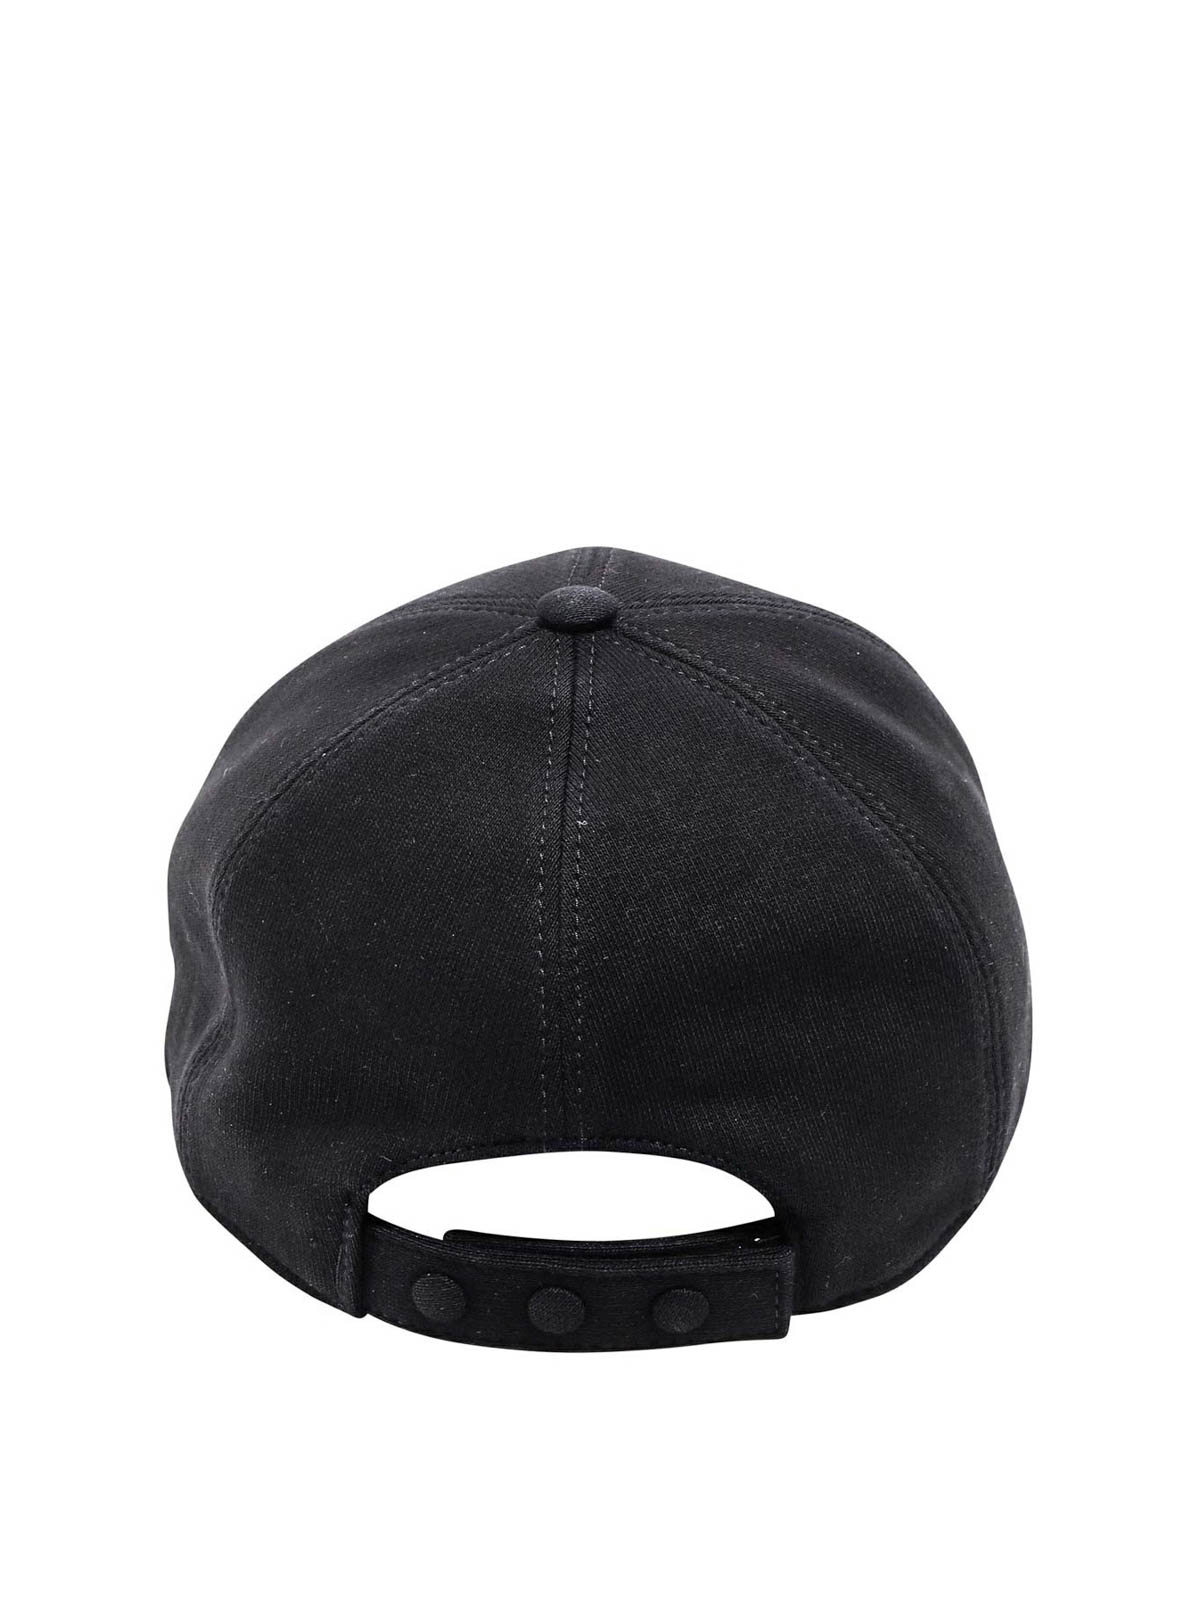 Hats & caps Burberry - Black cotton baseball hat - 8038141 | iKRIX.com